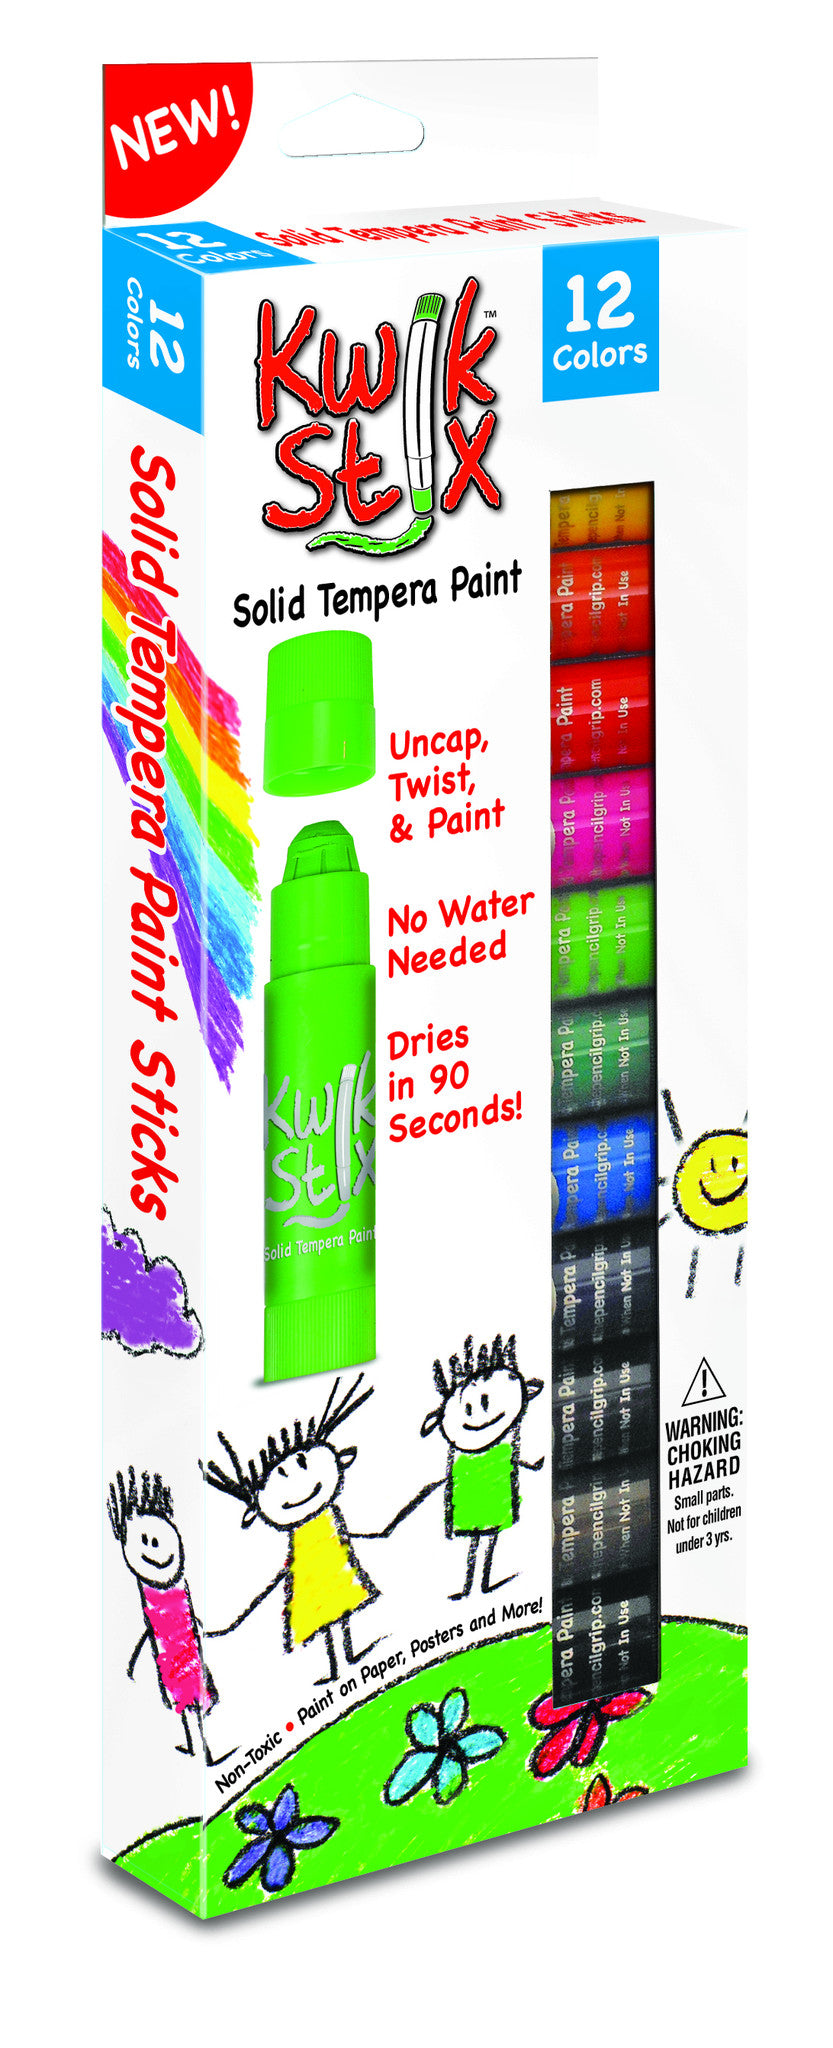 The Pencil Grip Kwik Stix 12-color Solid Tempera Paint, Assorted Colors 